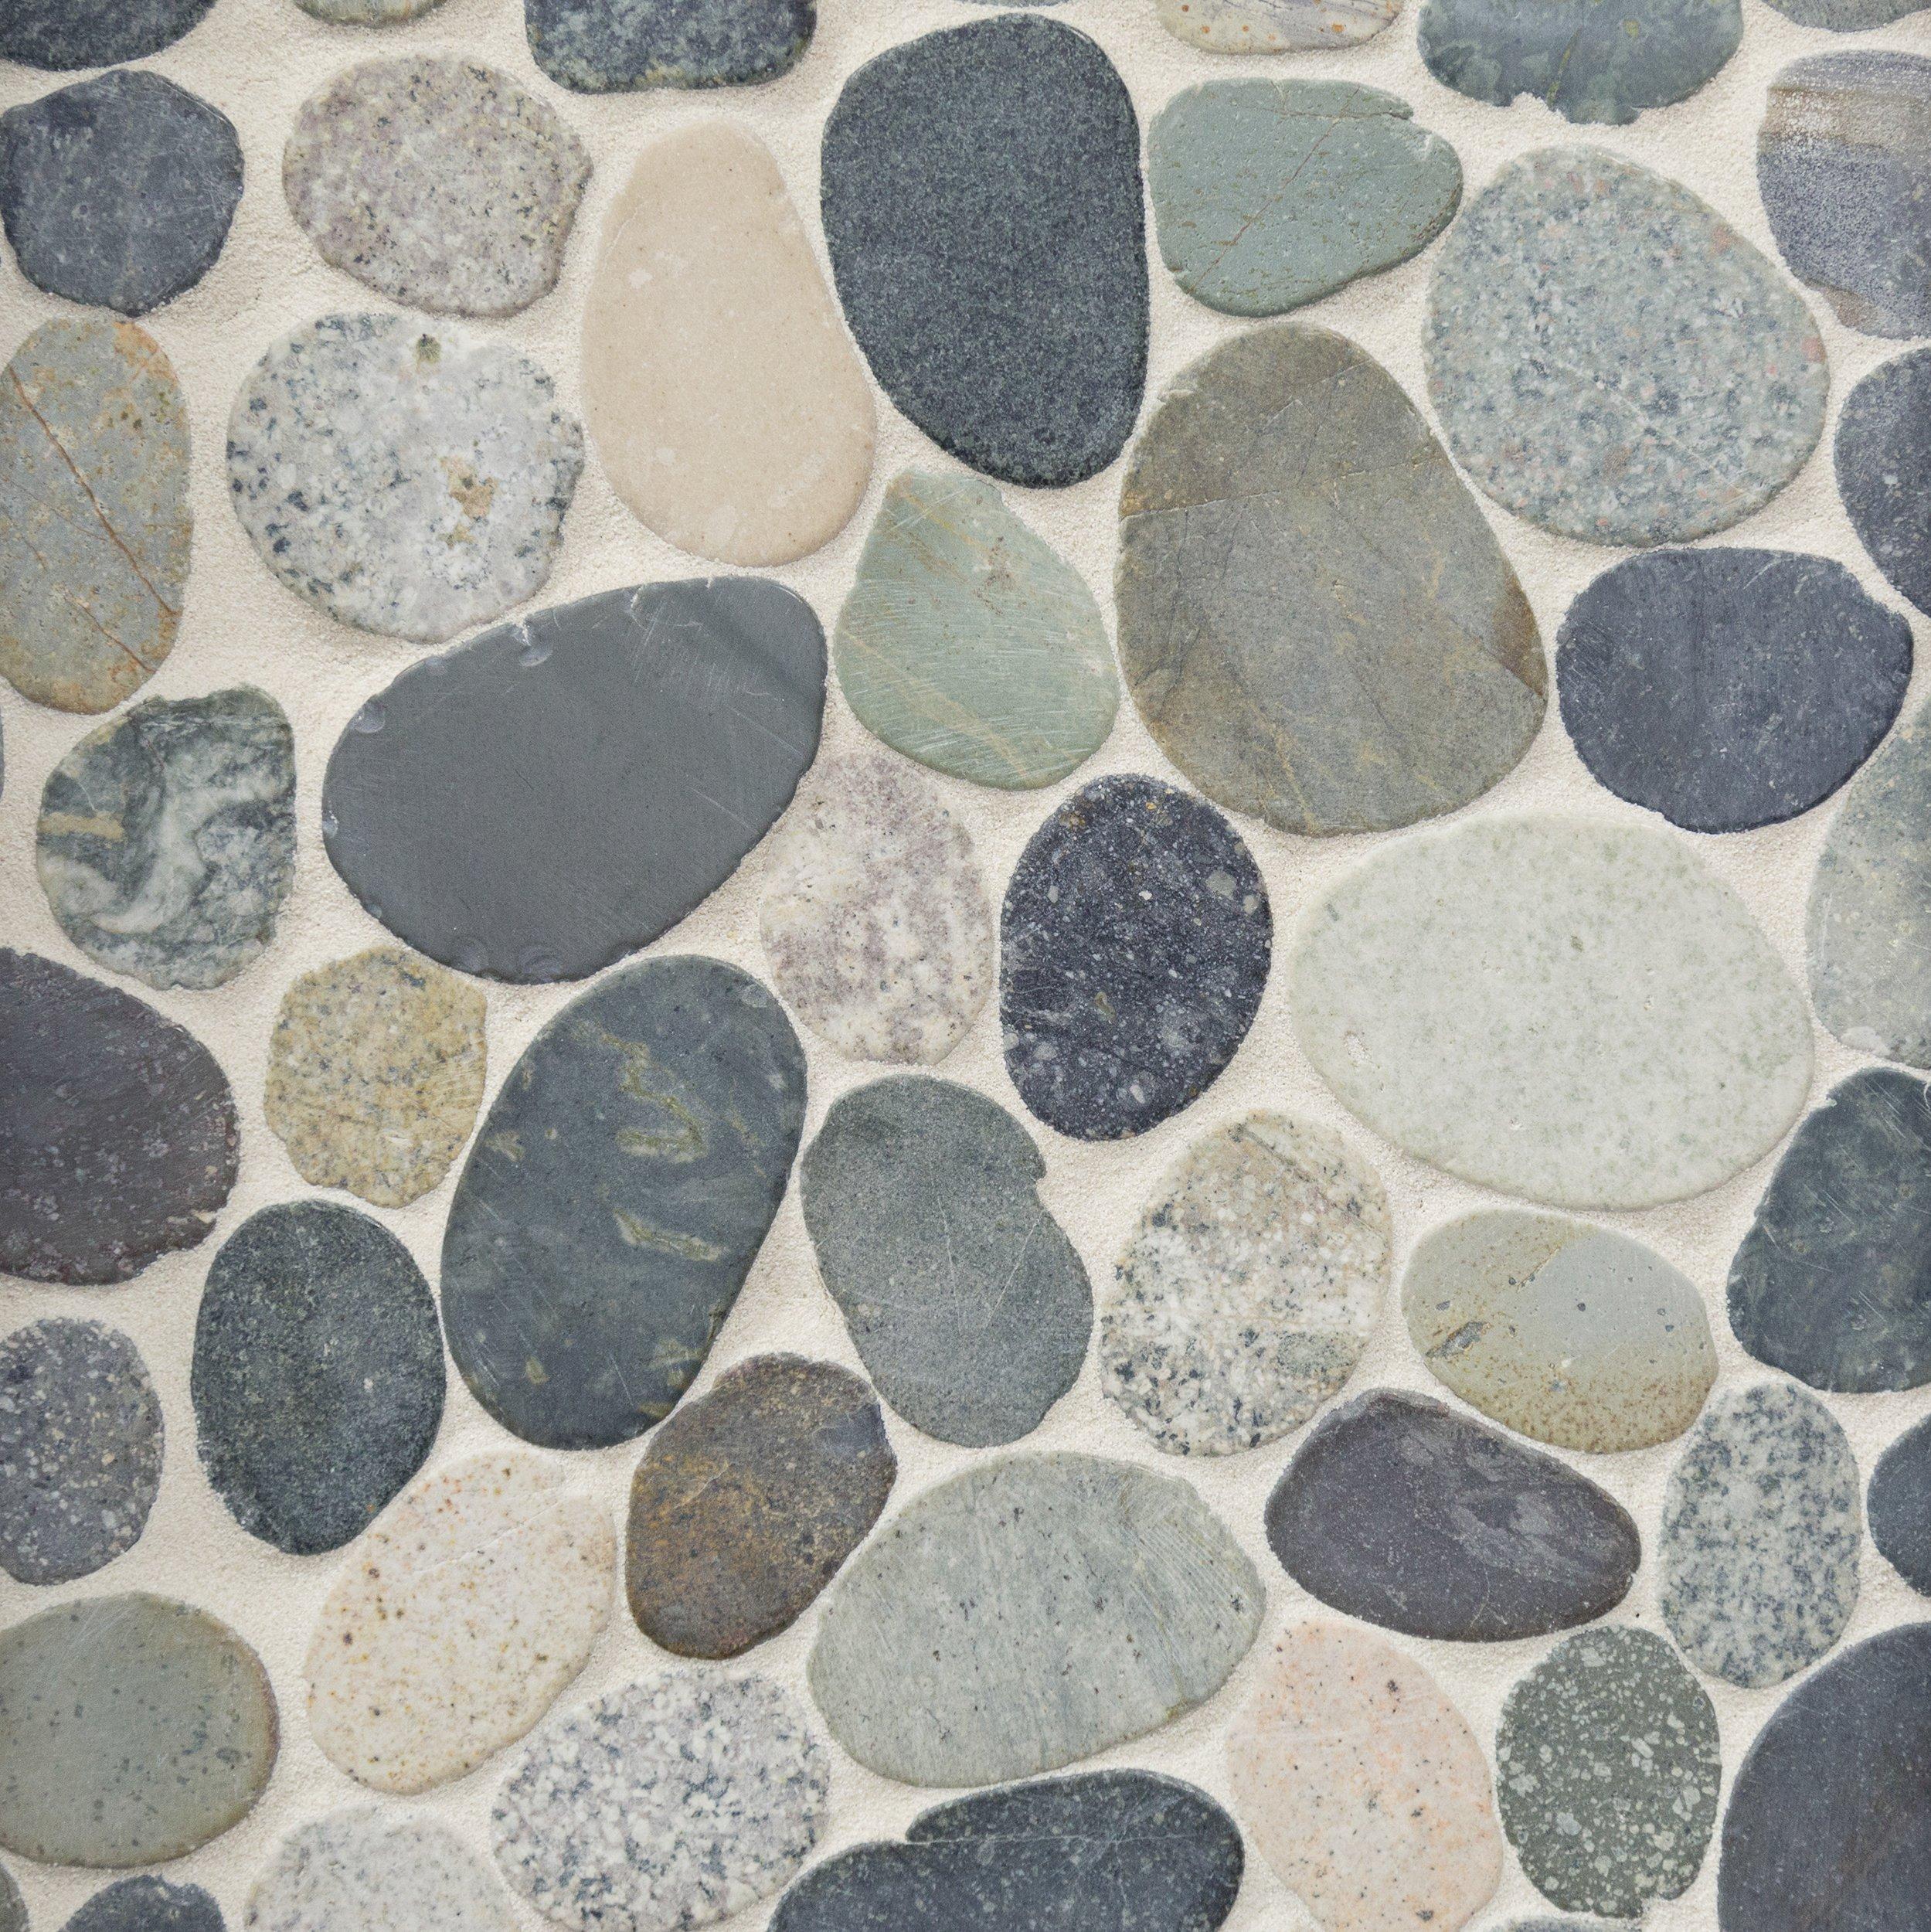 Kayan River Pebble Mosaic